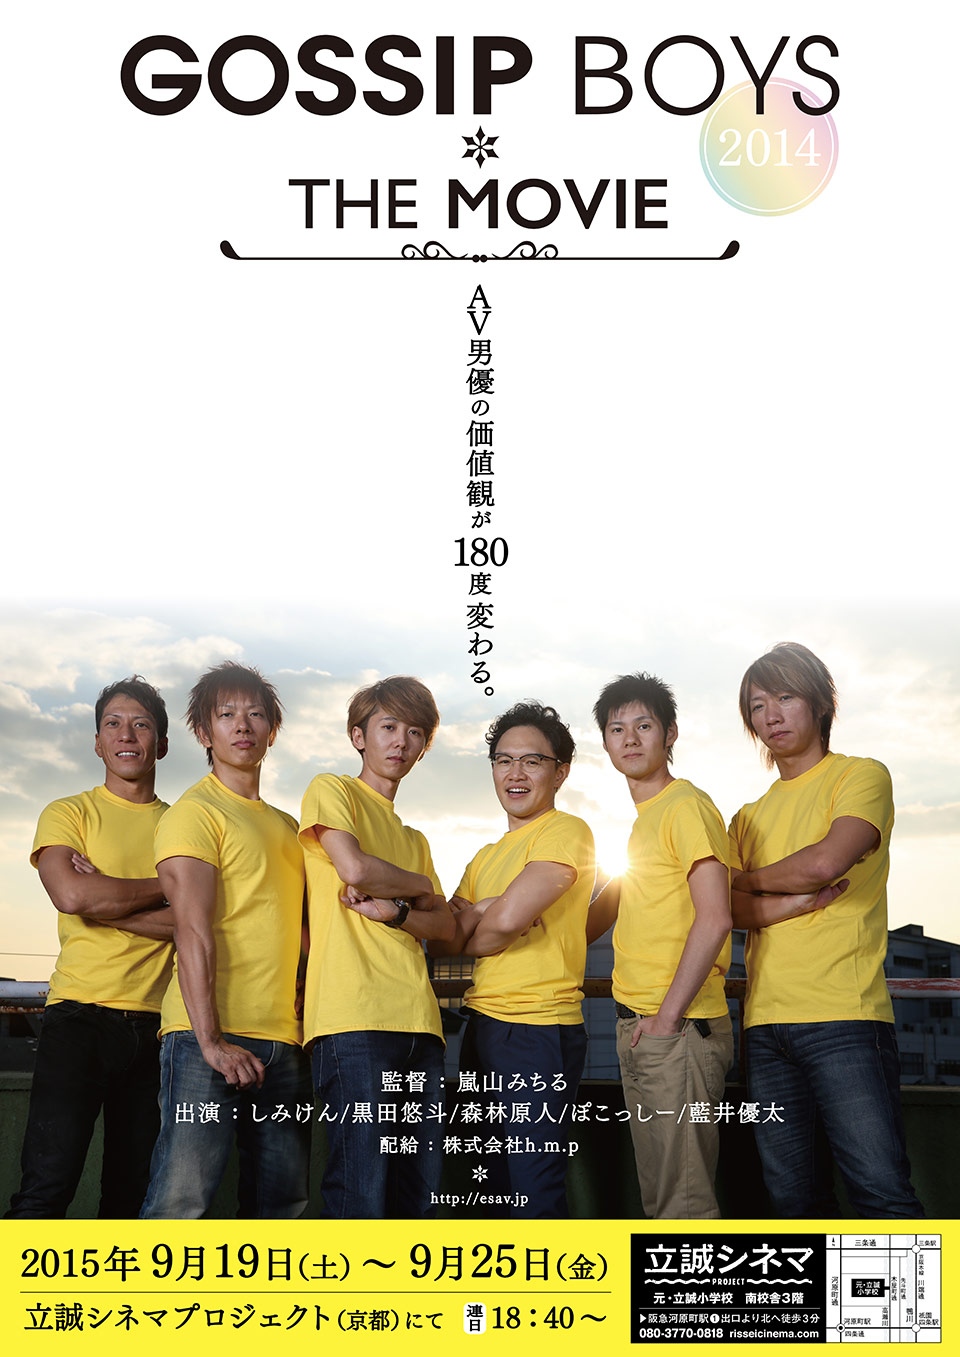 『GOSSIPBOYS 2014 THE MOVIE』 in 立誠シネマプロジェクトポスター